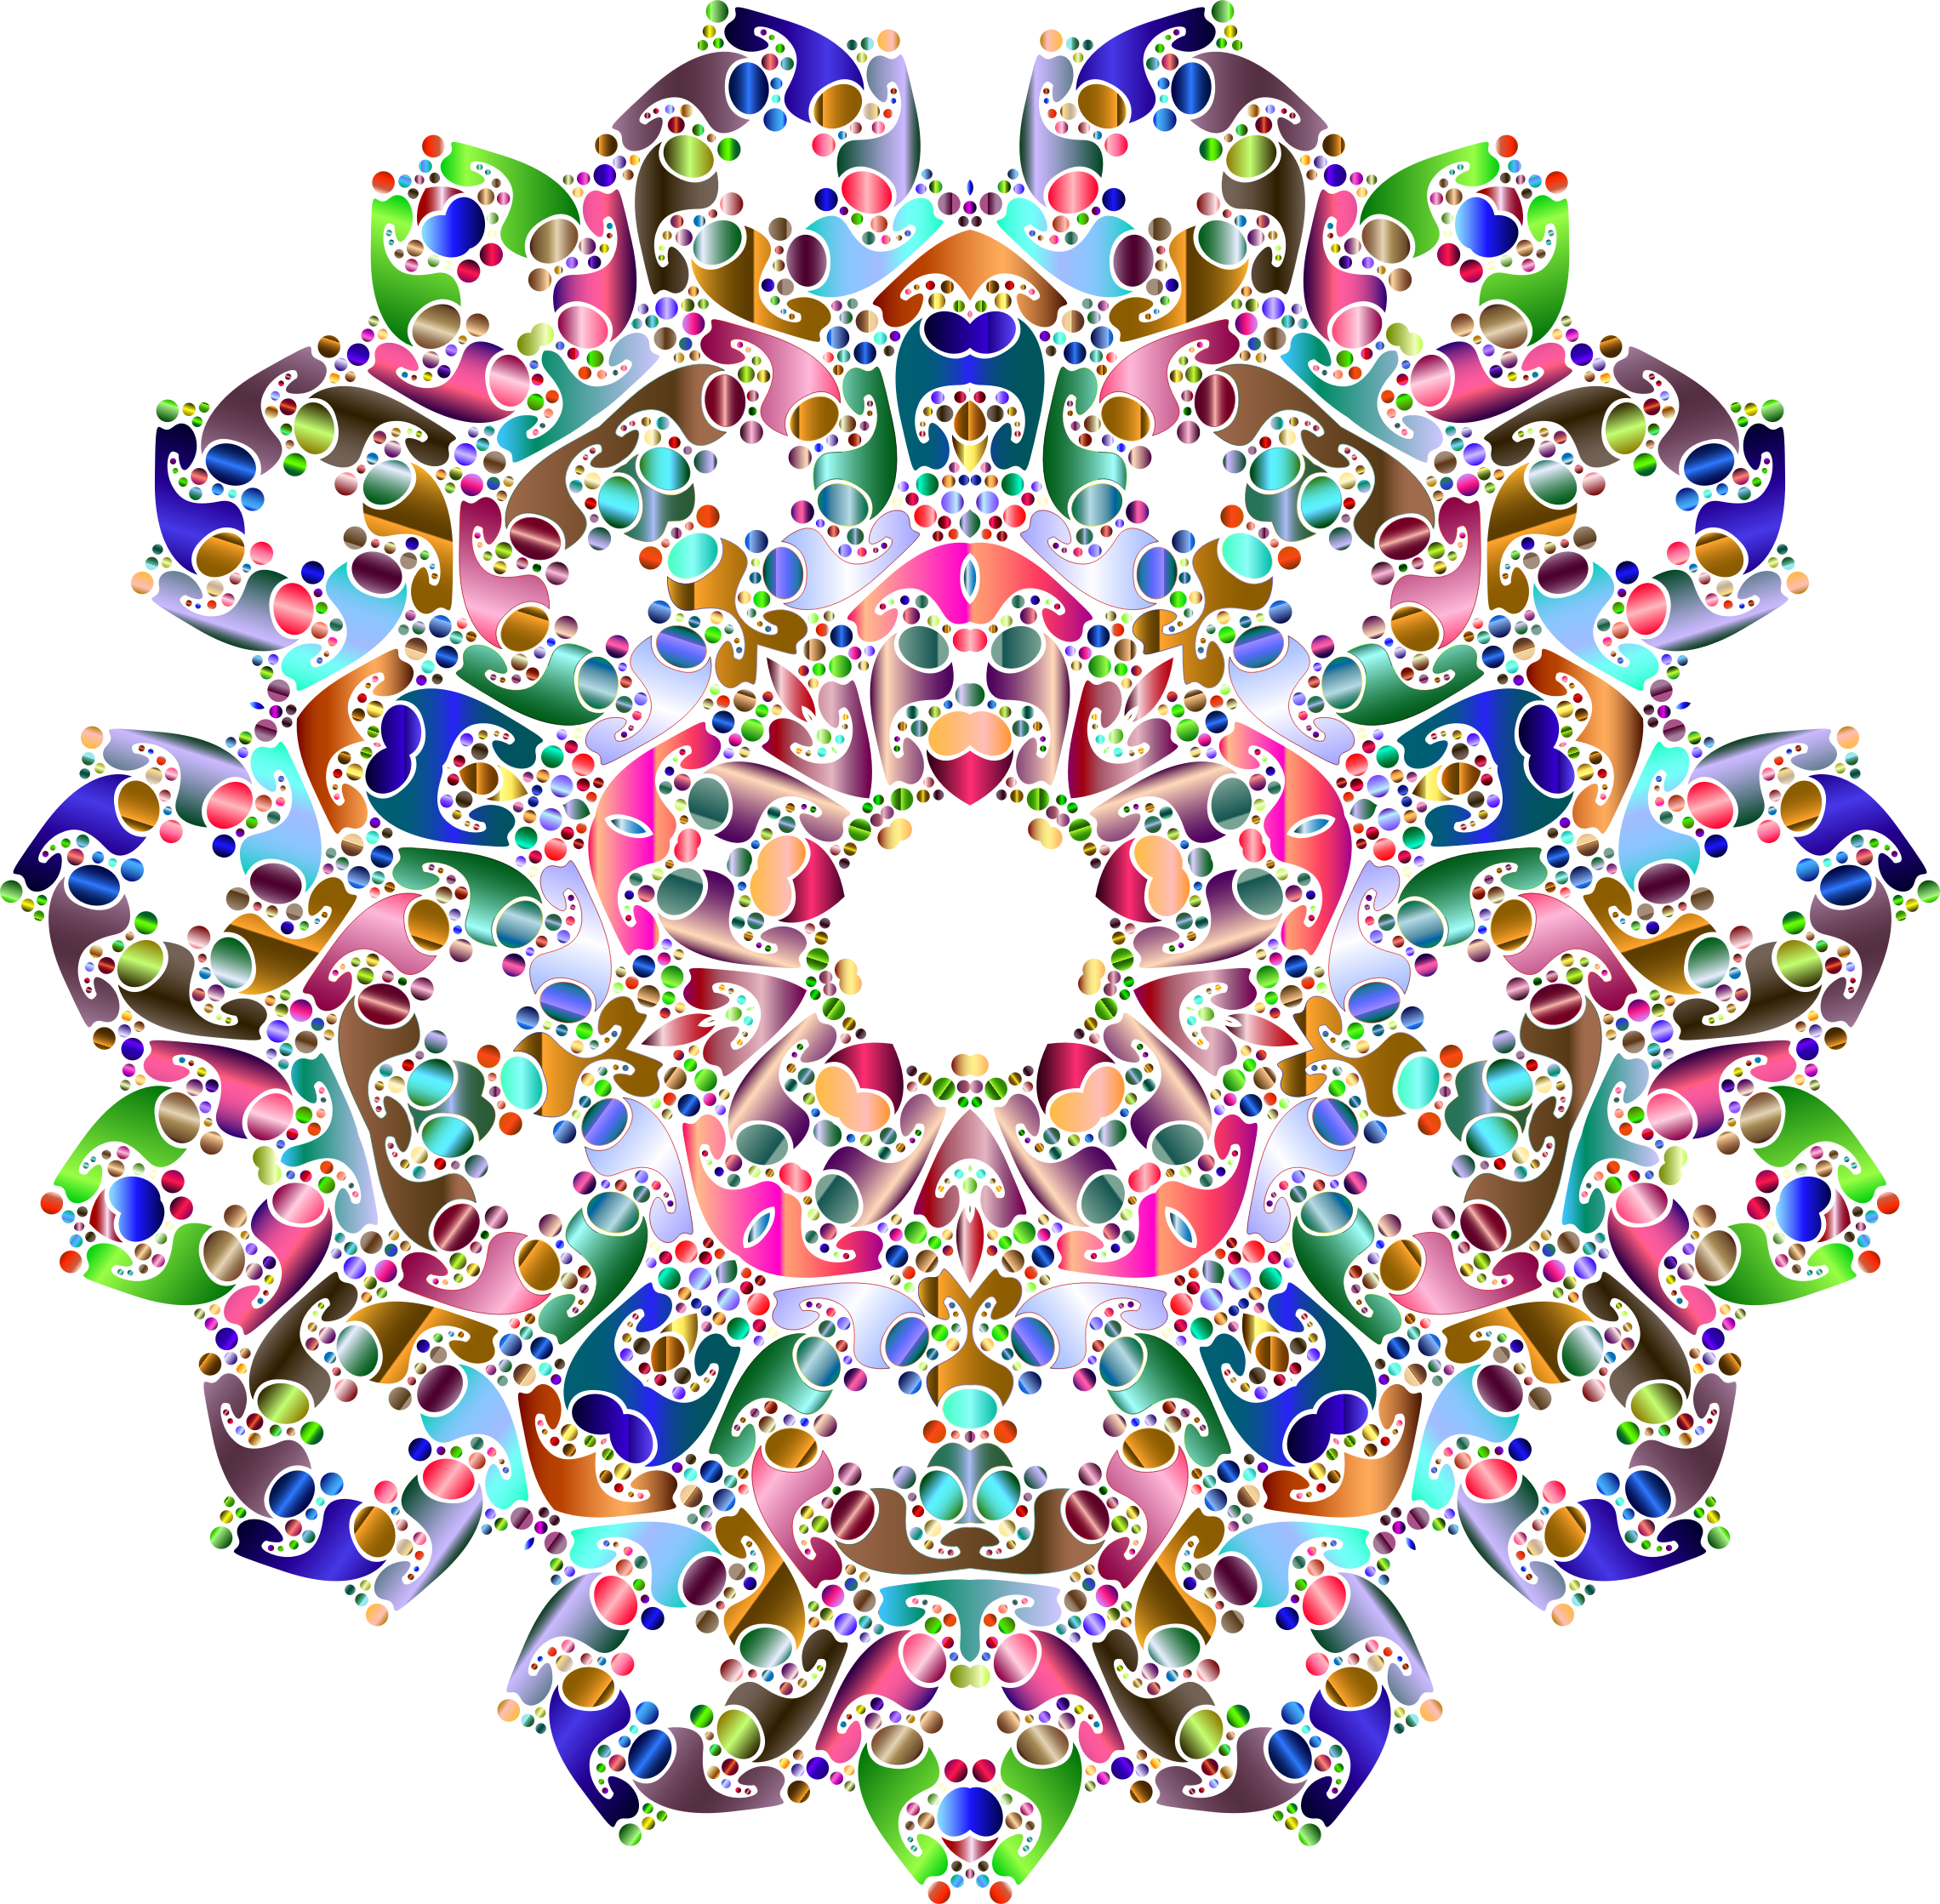 Big Image - Hexagonal Tessellation (2280x2238)